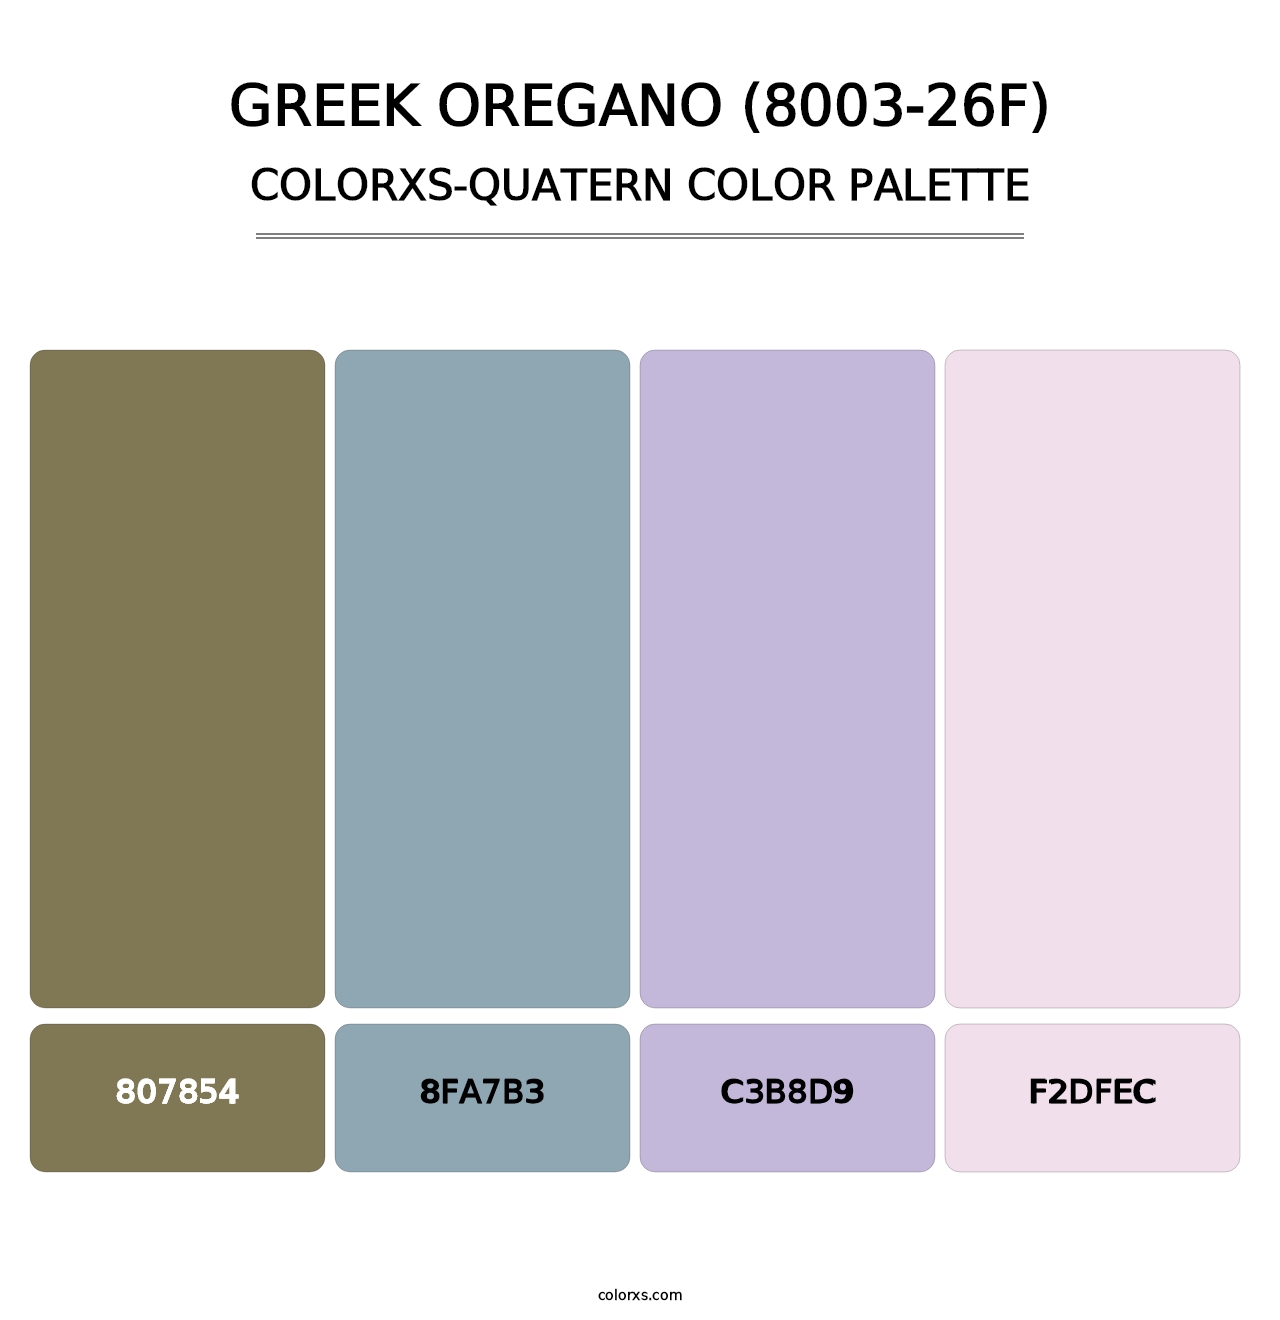 Greek Oregano (8003-26F) - Colorxs Quatern Palette